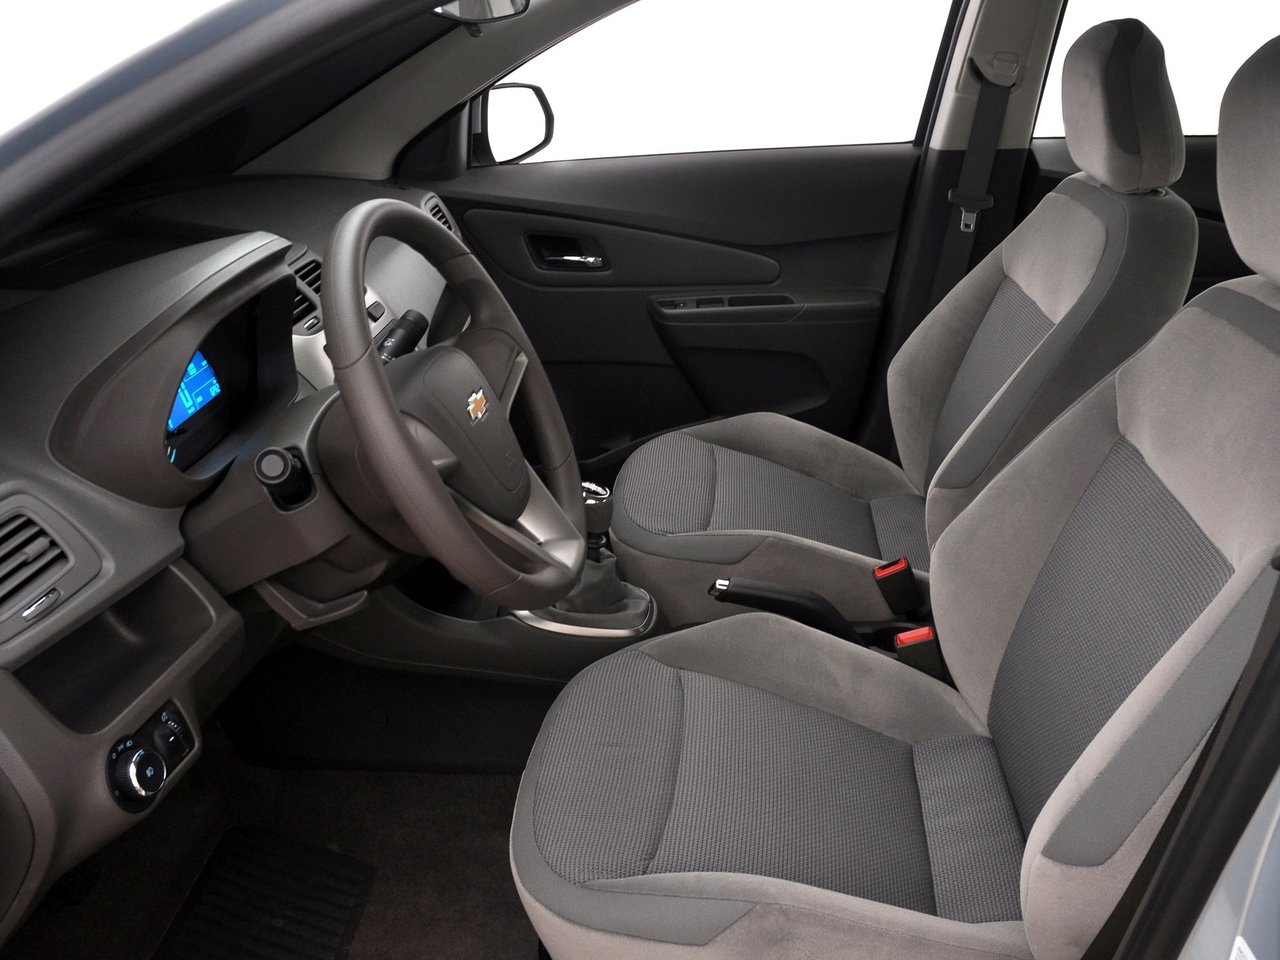 Chevrolet Cobalt interior - Seats